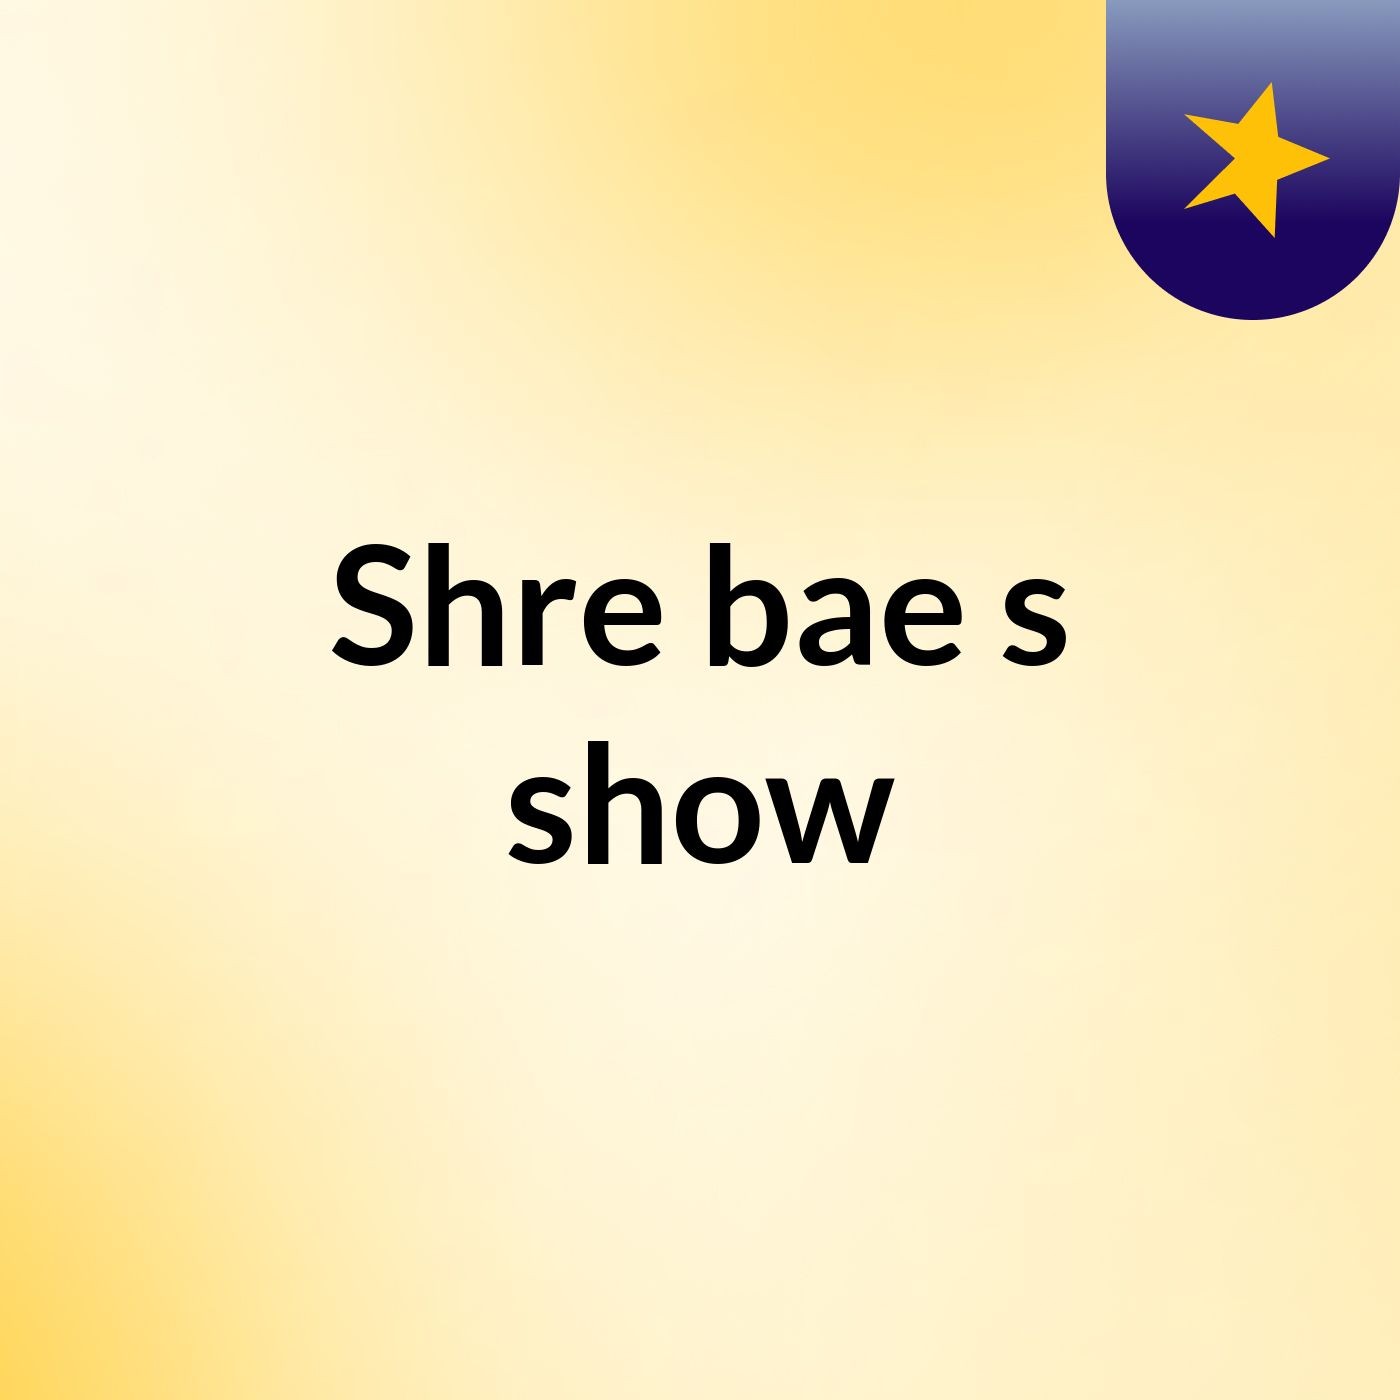 Shre bae's show